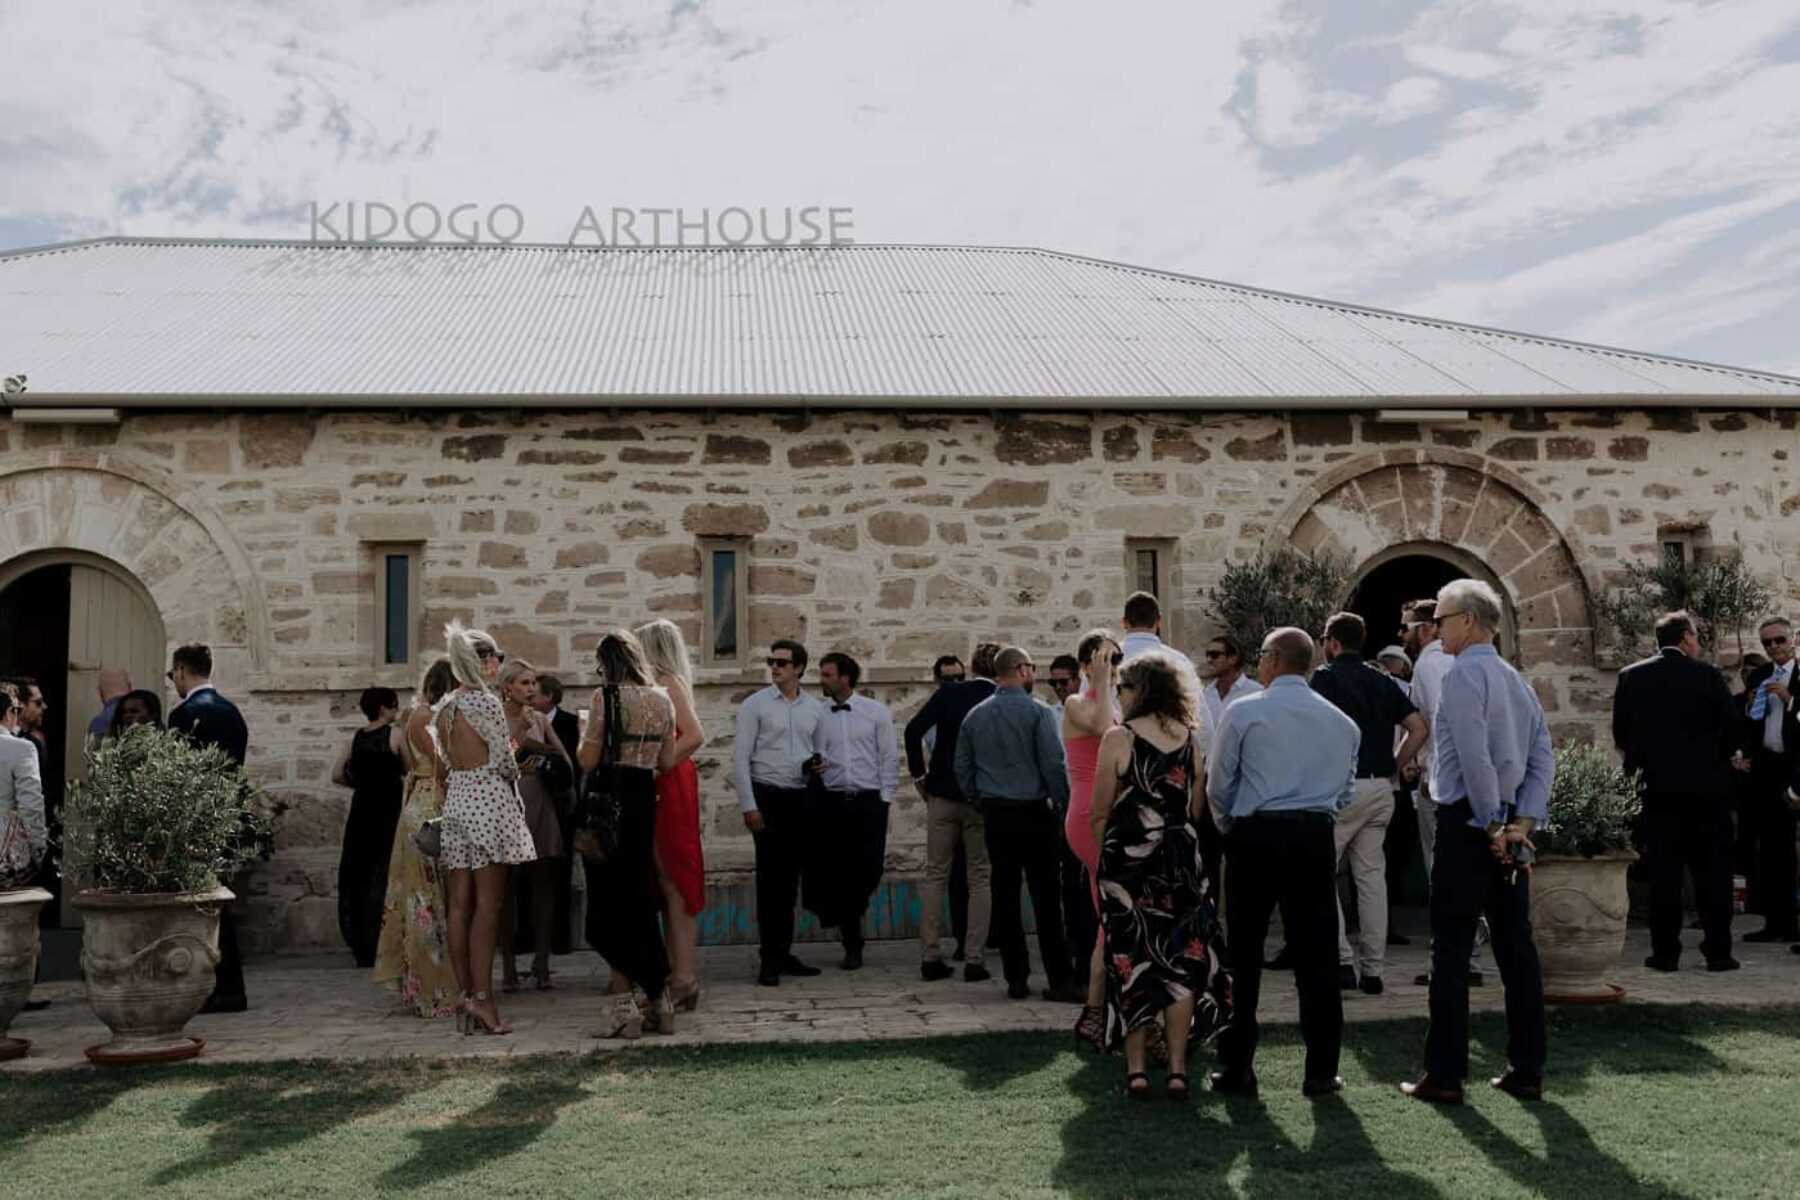 Fremantle wedding at Kidogo Arthouse - photography by Alexandra Cohen